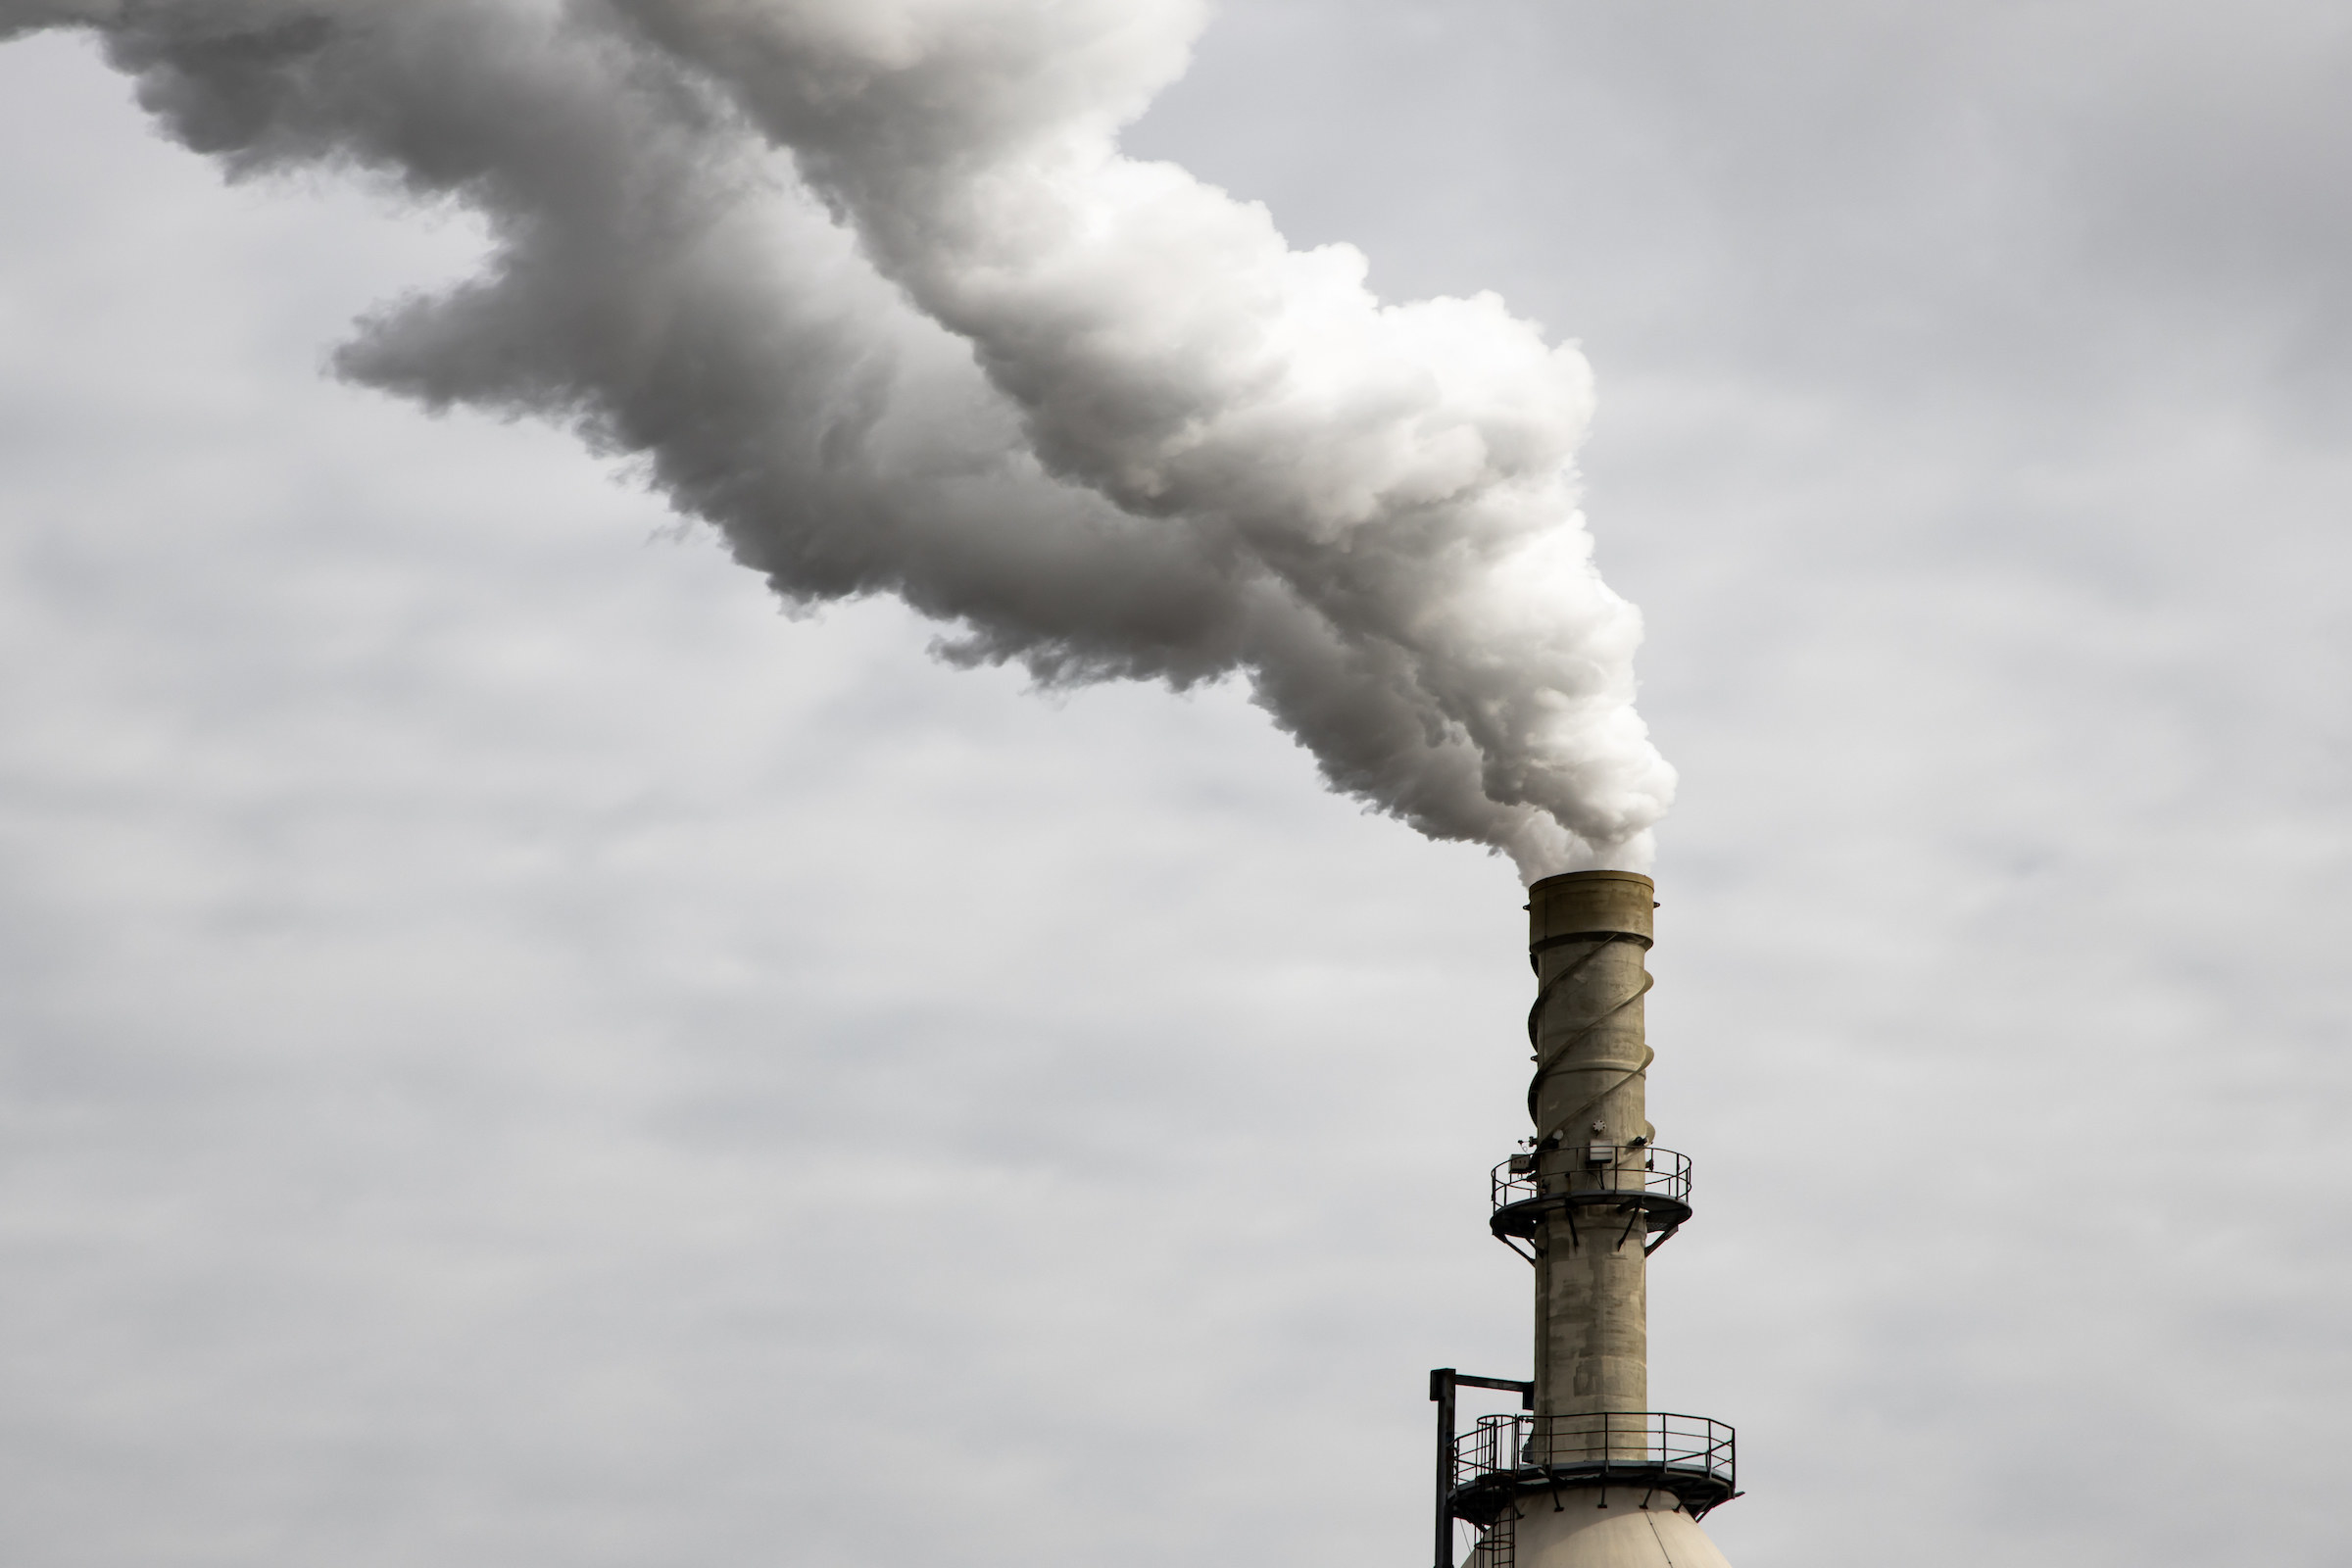 A factory chimney spewing smoke into a grey sky